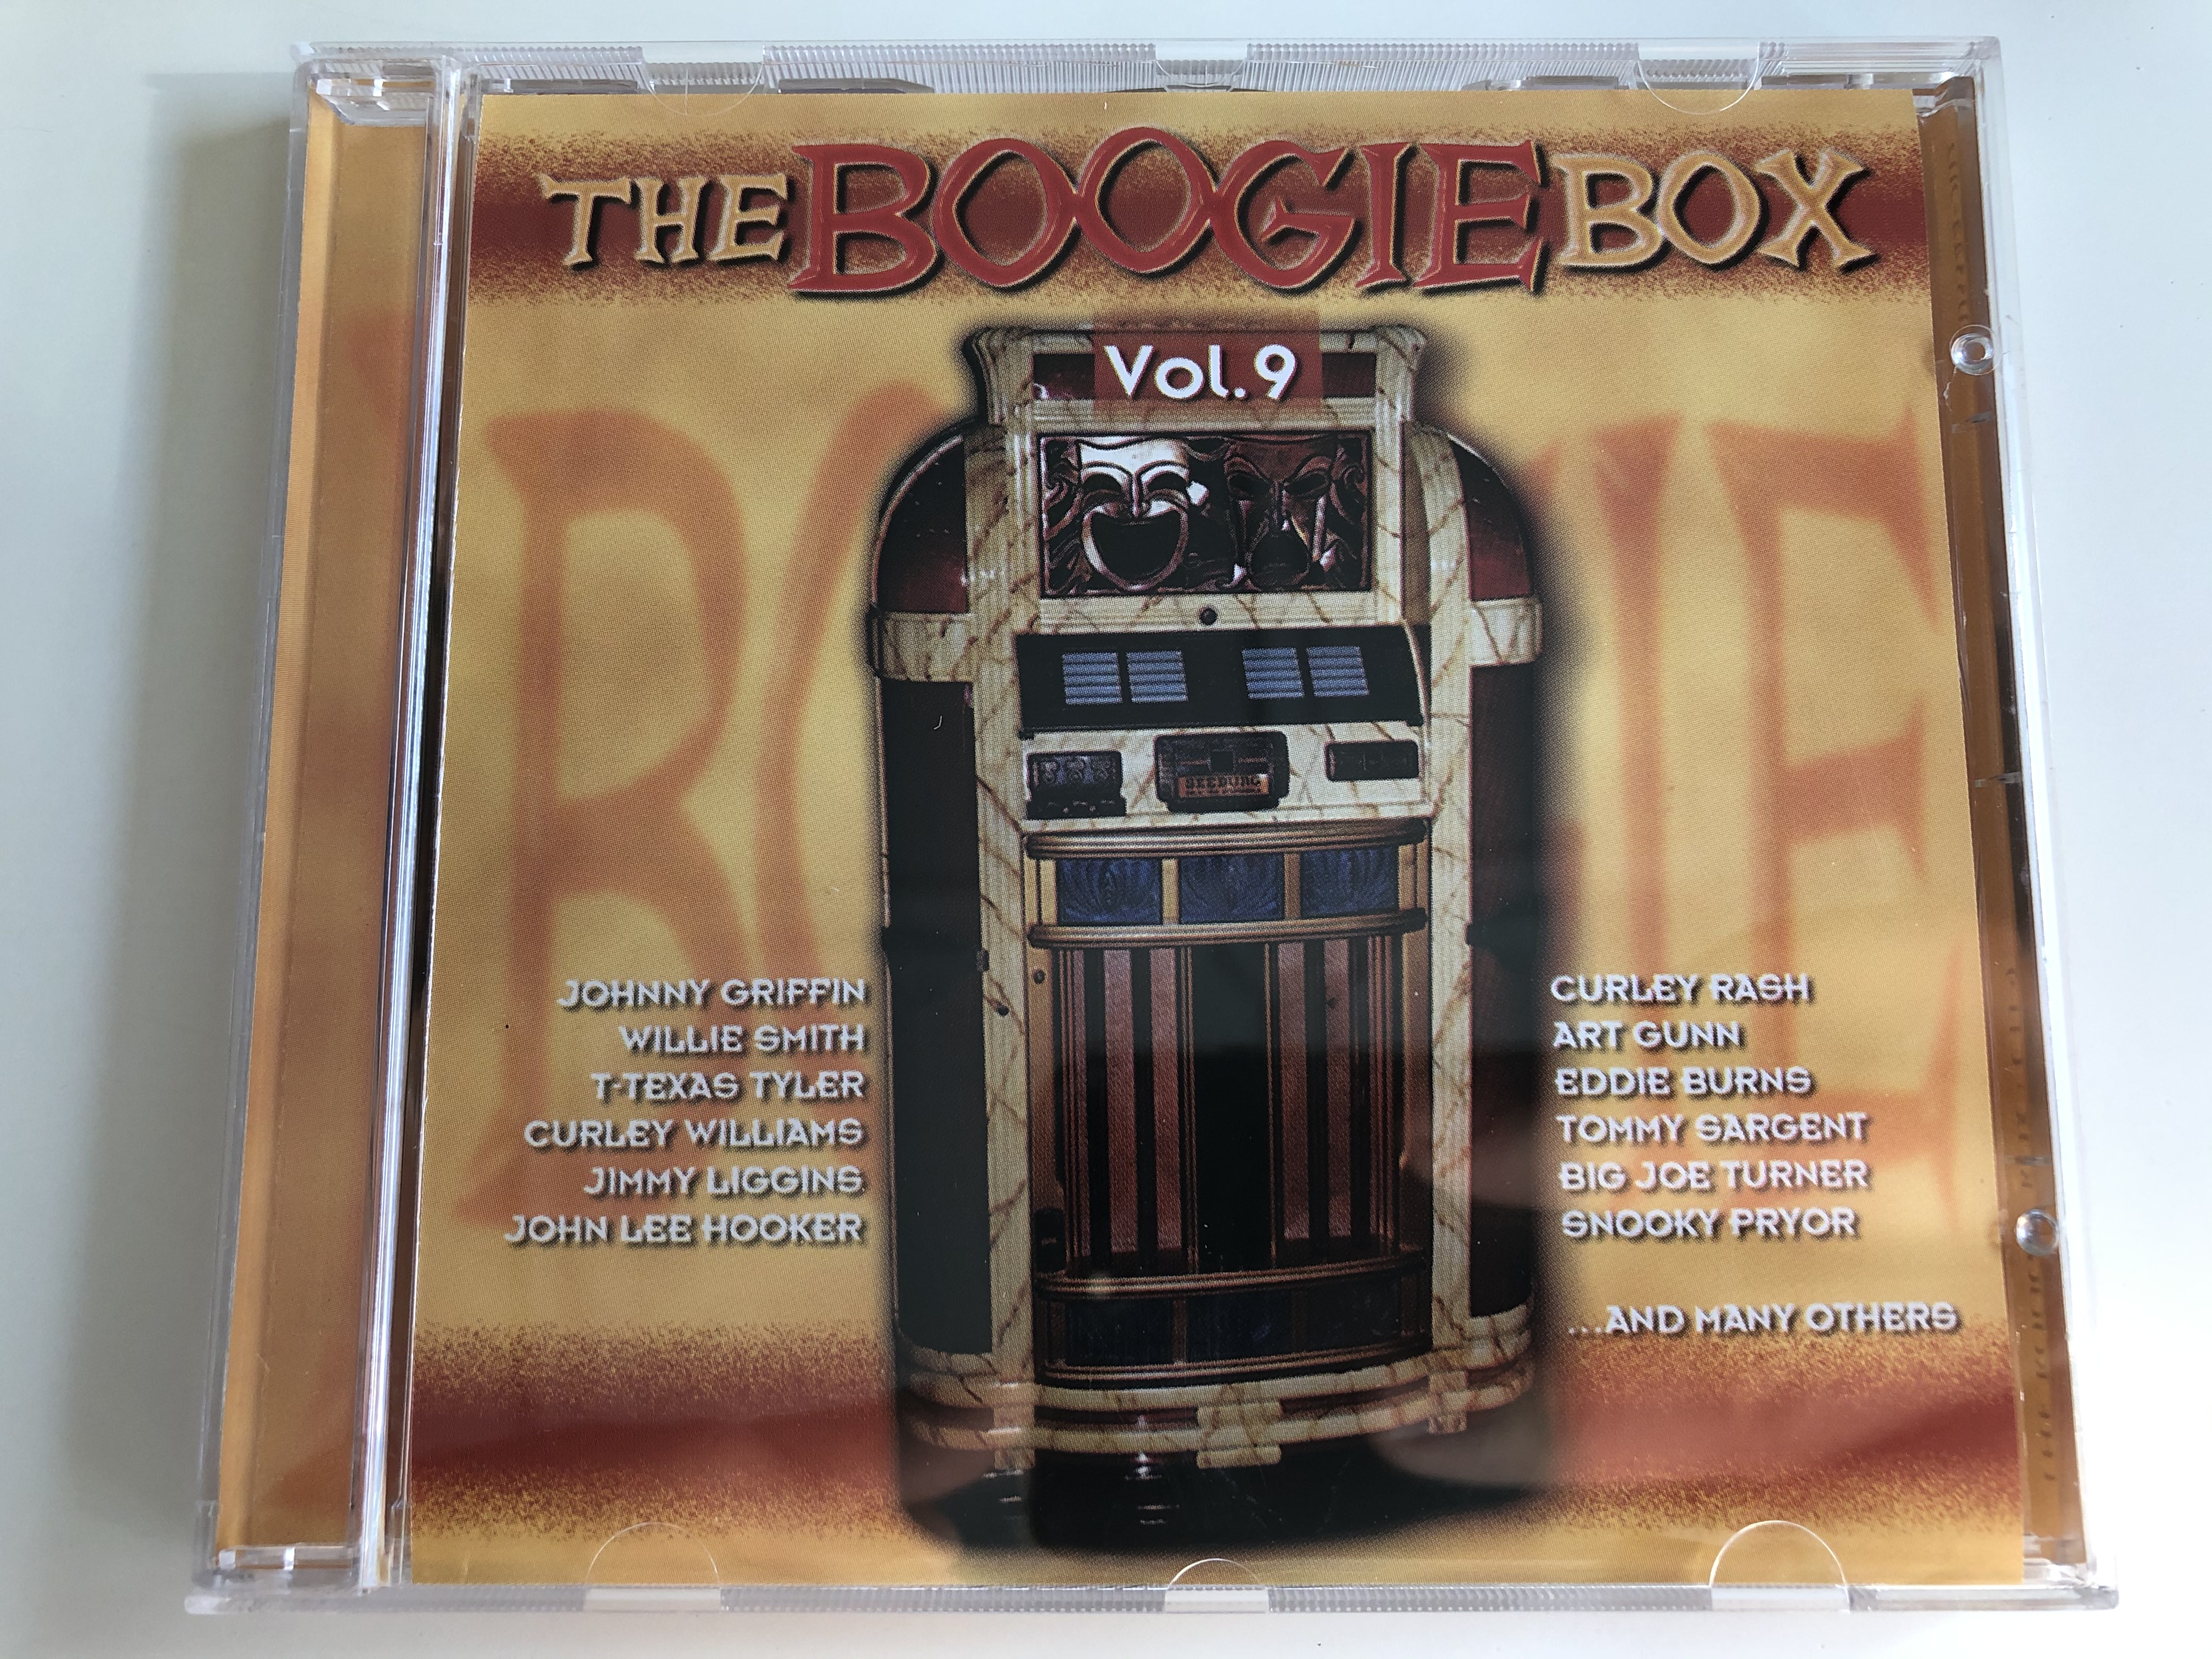 the-boogie-box-vol.-9-johnny-griffin-willie-smith-t-texas-tyler-curley-williams-jimmy-liggins-john-lee-hooker-curley-rash-art-gunn-eddie-burns-tommy-sargent-big-joe-turner-snooky-pryor-and-many-othe-1-.jpg